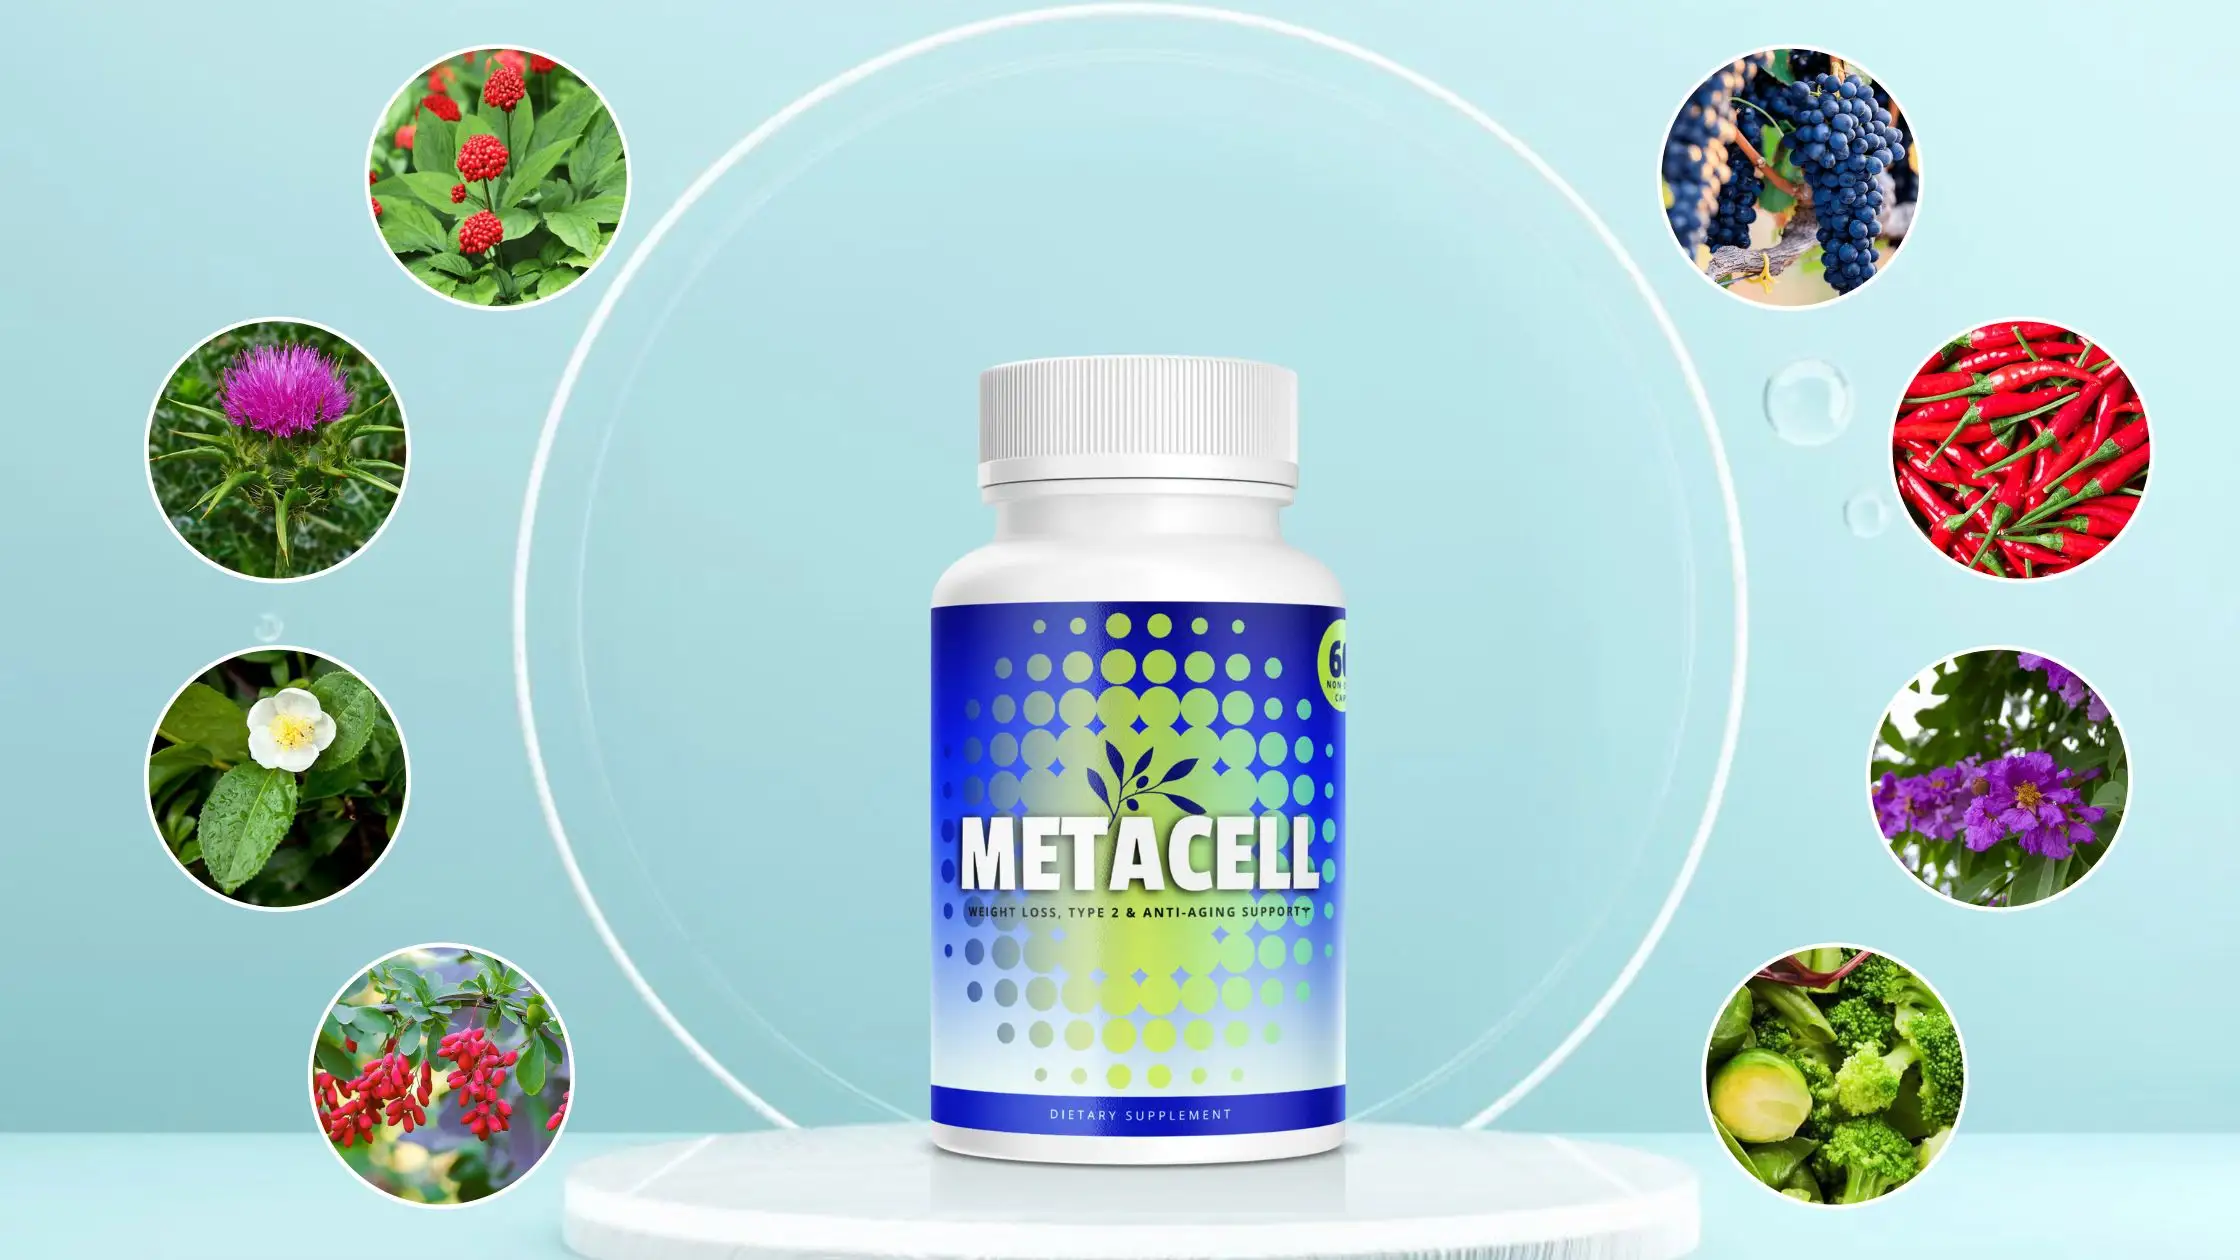 Metacell Ingredients